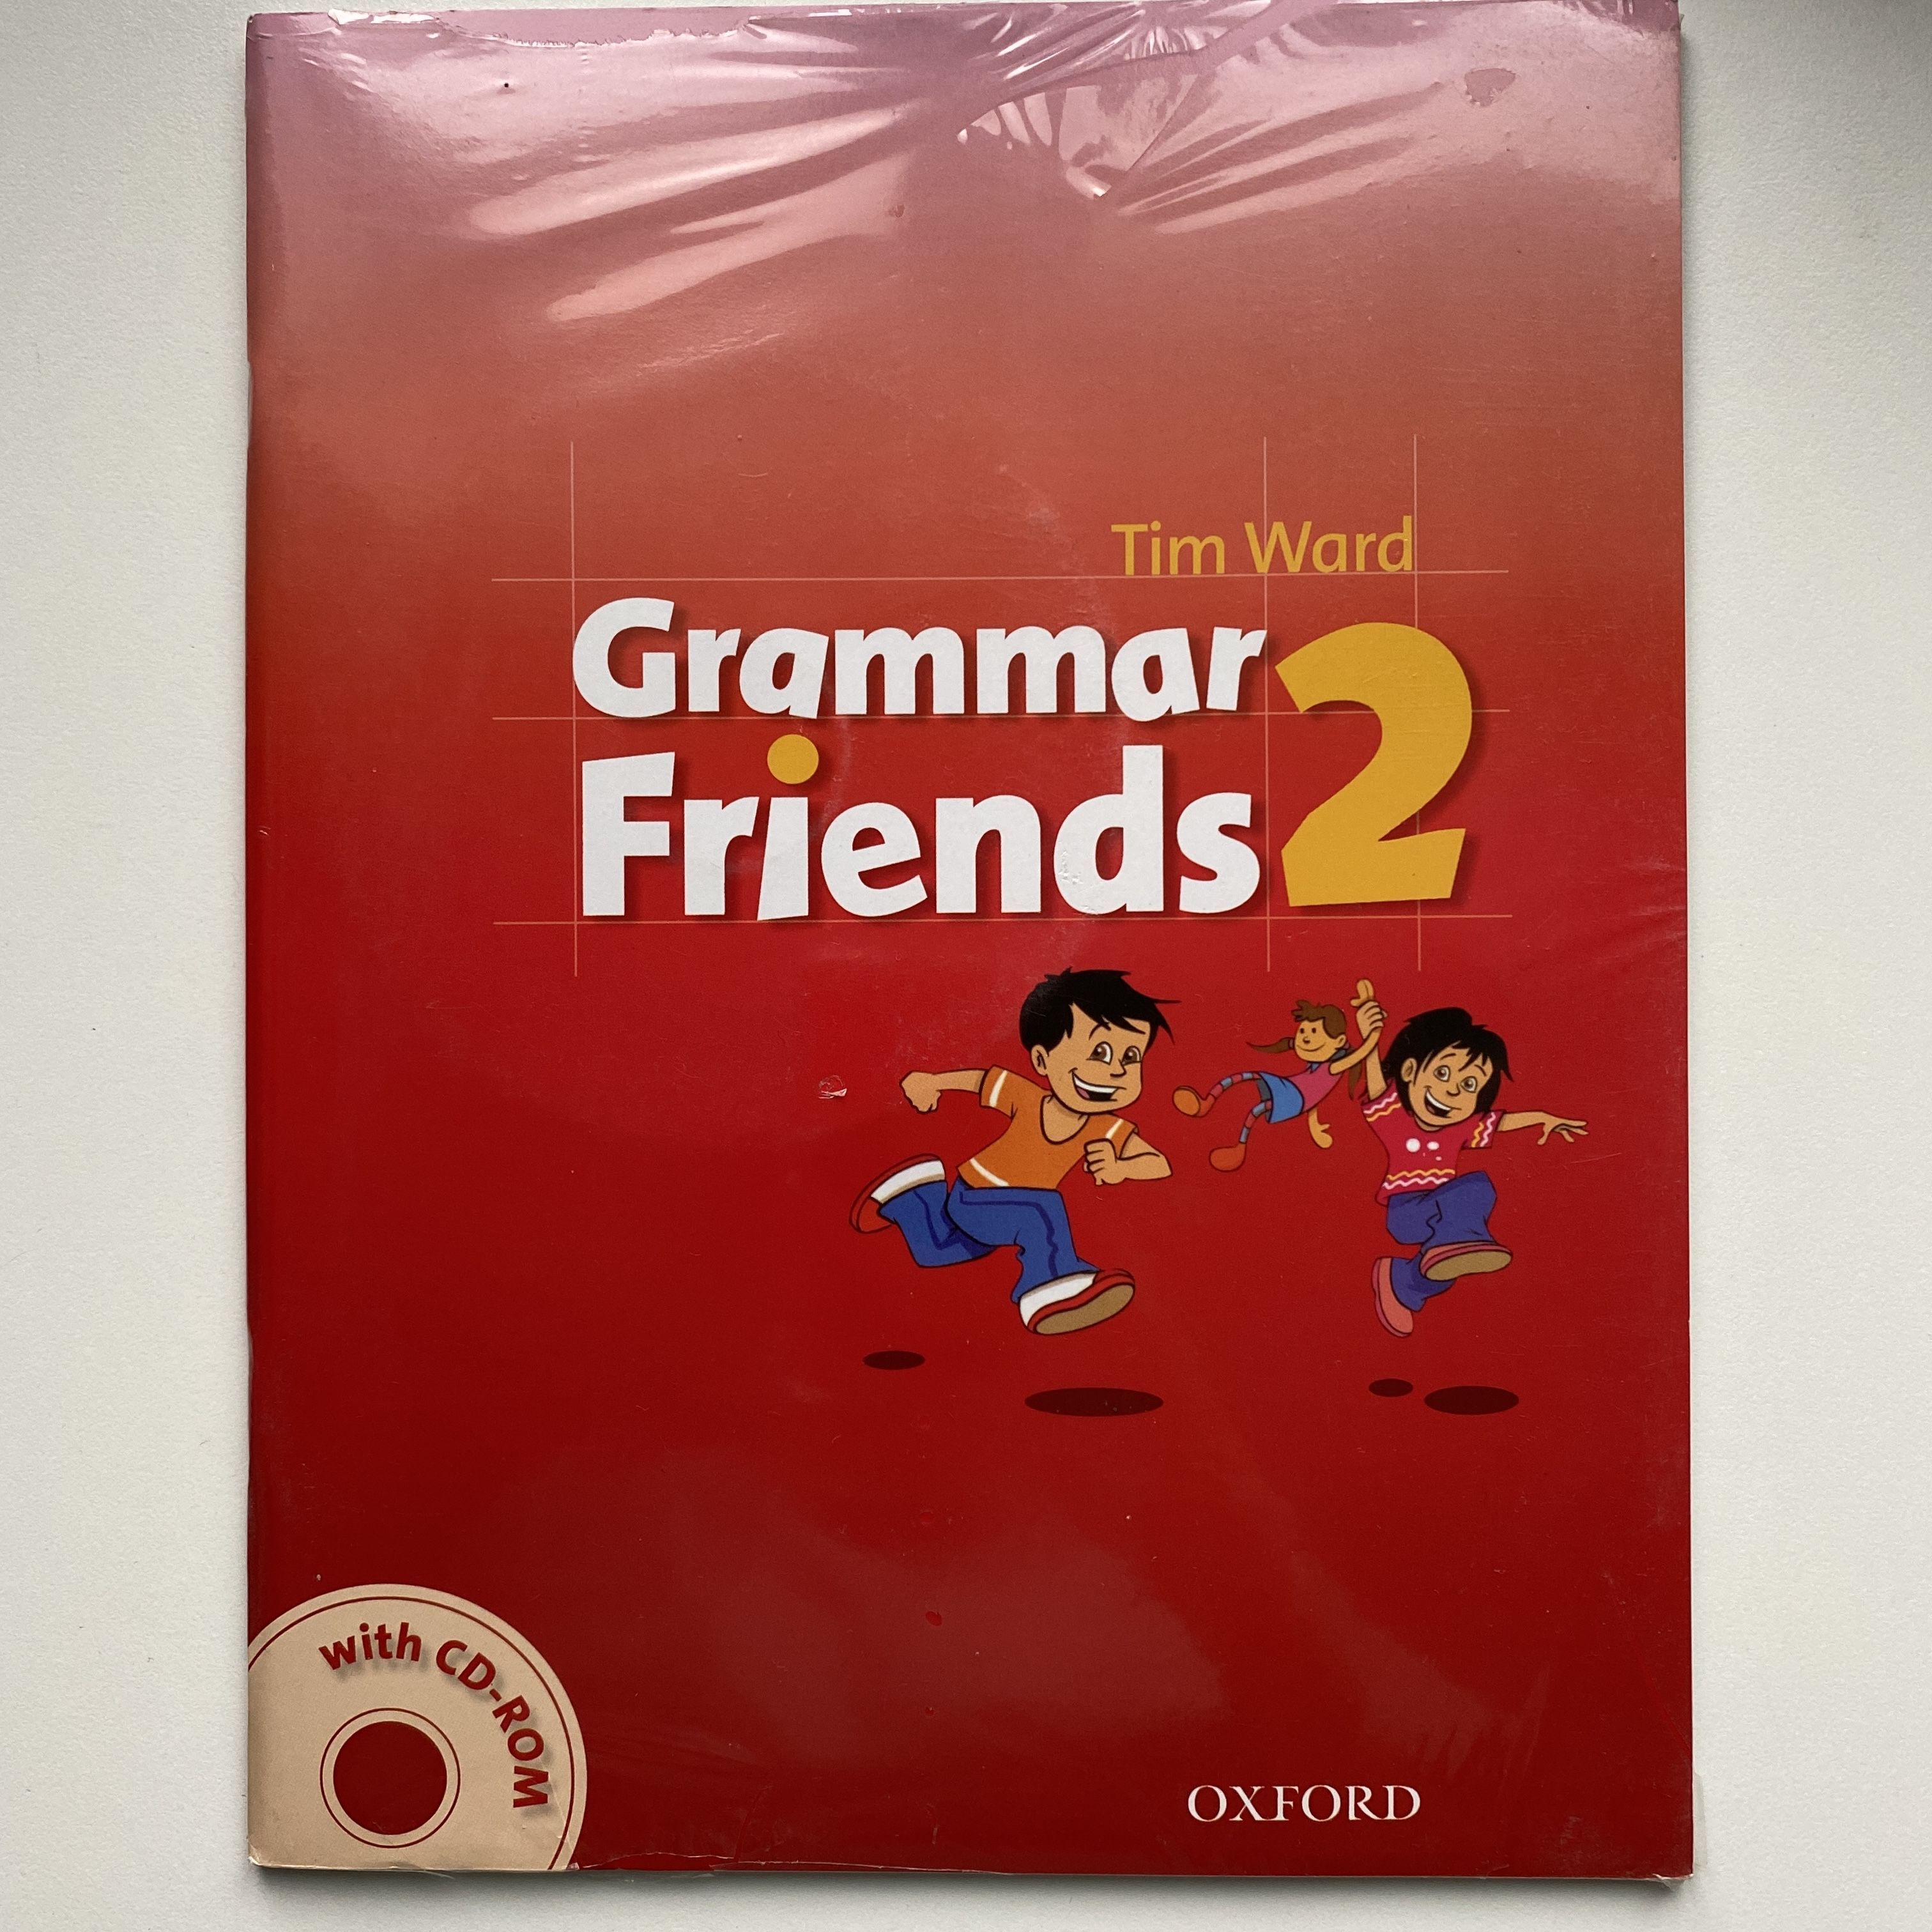 My grammar friends. Grammar friends 1. Grammar friends 2. Grammar friends 4 Space. Граммар френдс стр 27 номер 2.